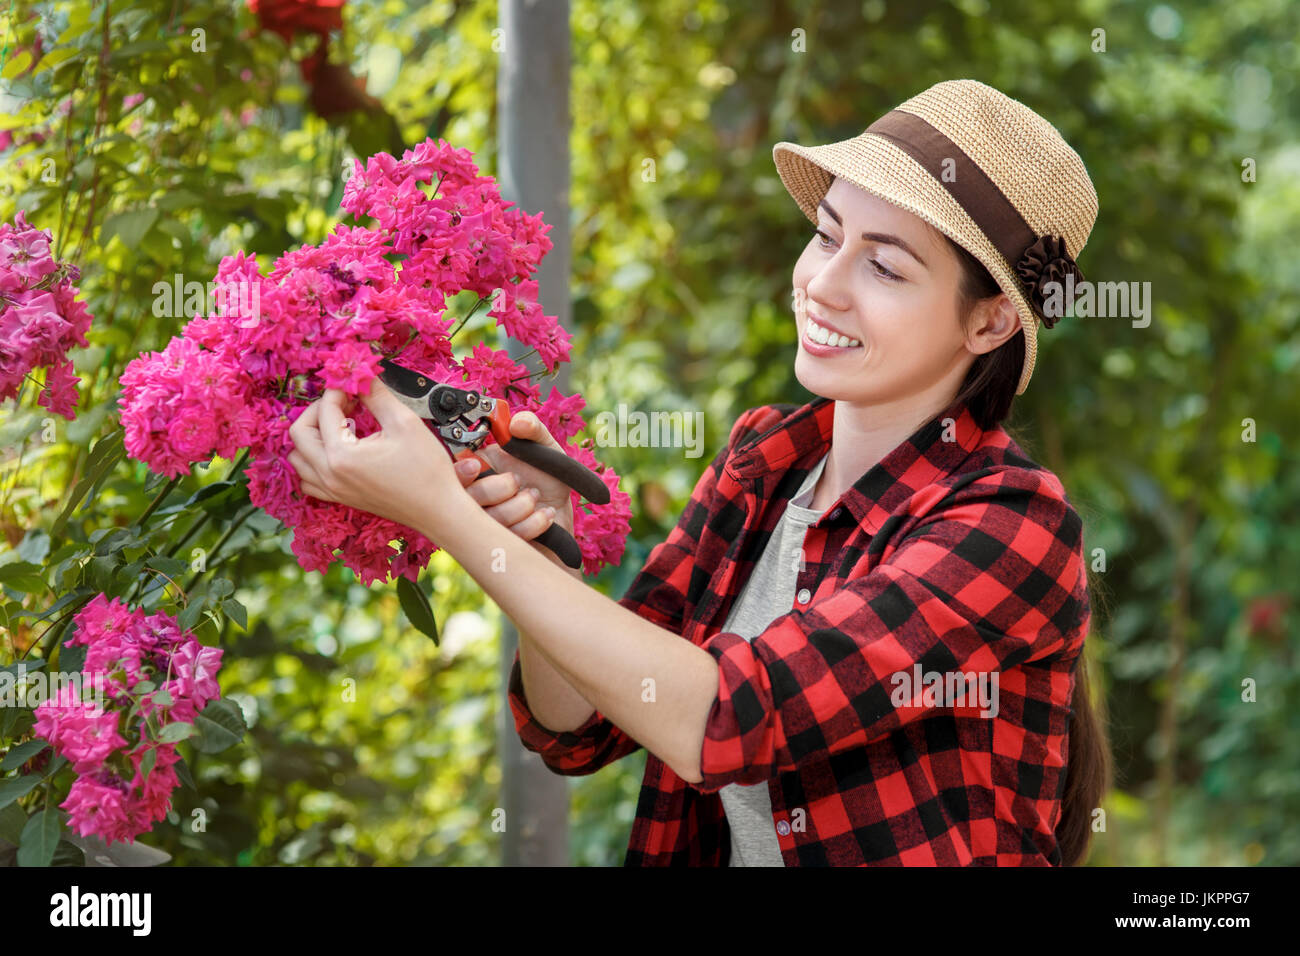 gardener trimming rose bush Stock Photo